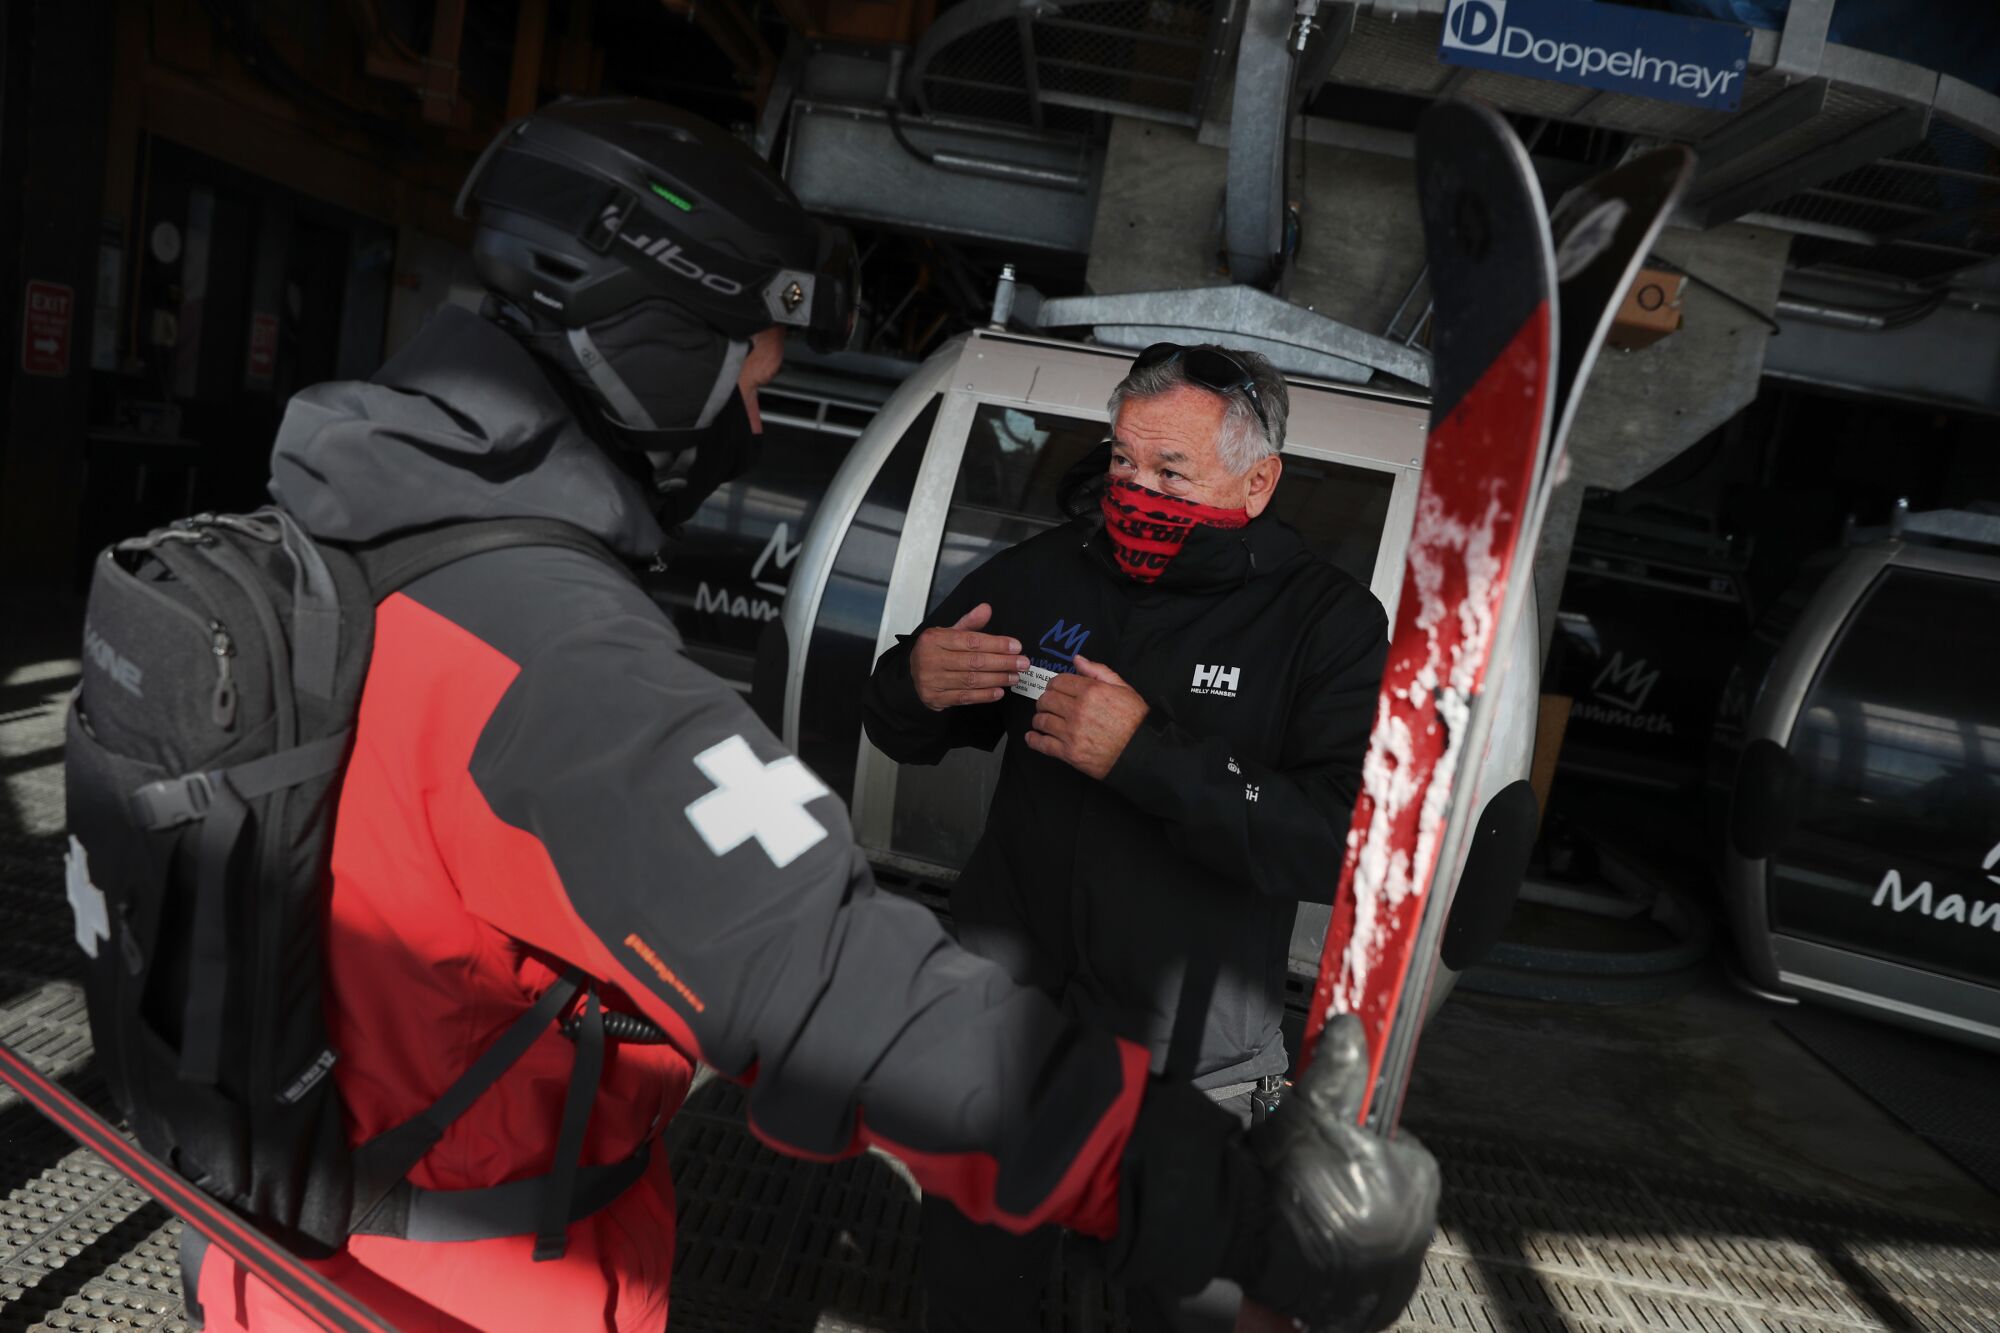 Valencia confers with a ski patrolman